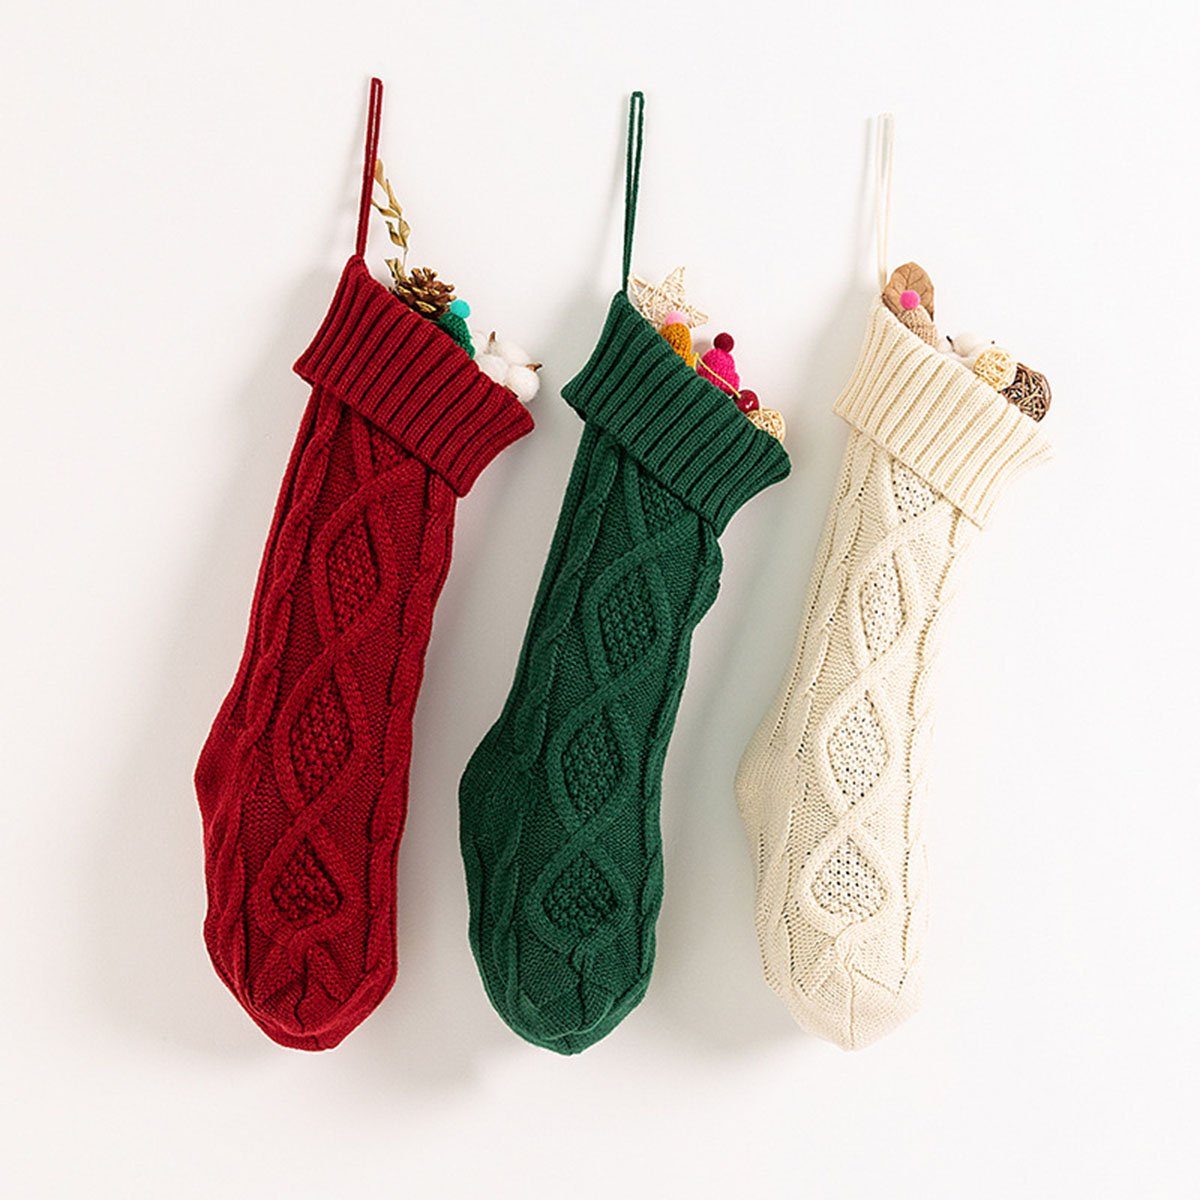 CTGtree (3 Tasche 3 Geschenk Hanging Nikolausstiefel Socks Weihnachtsstrumpf St)